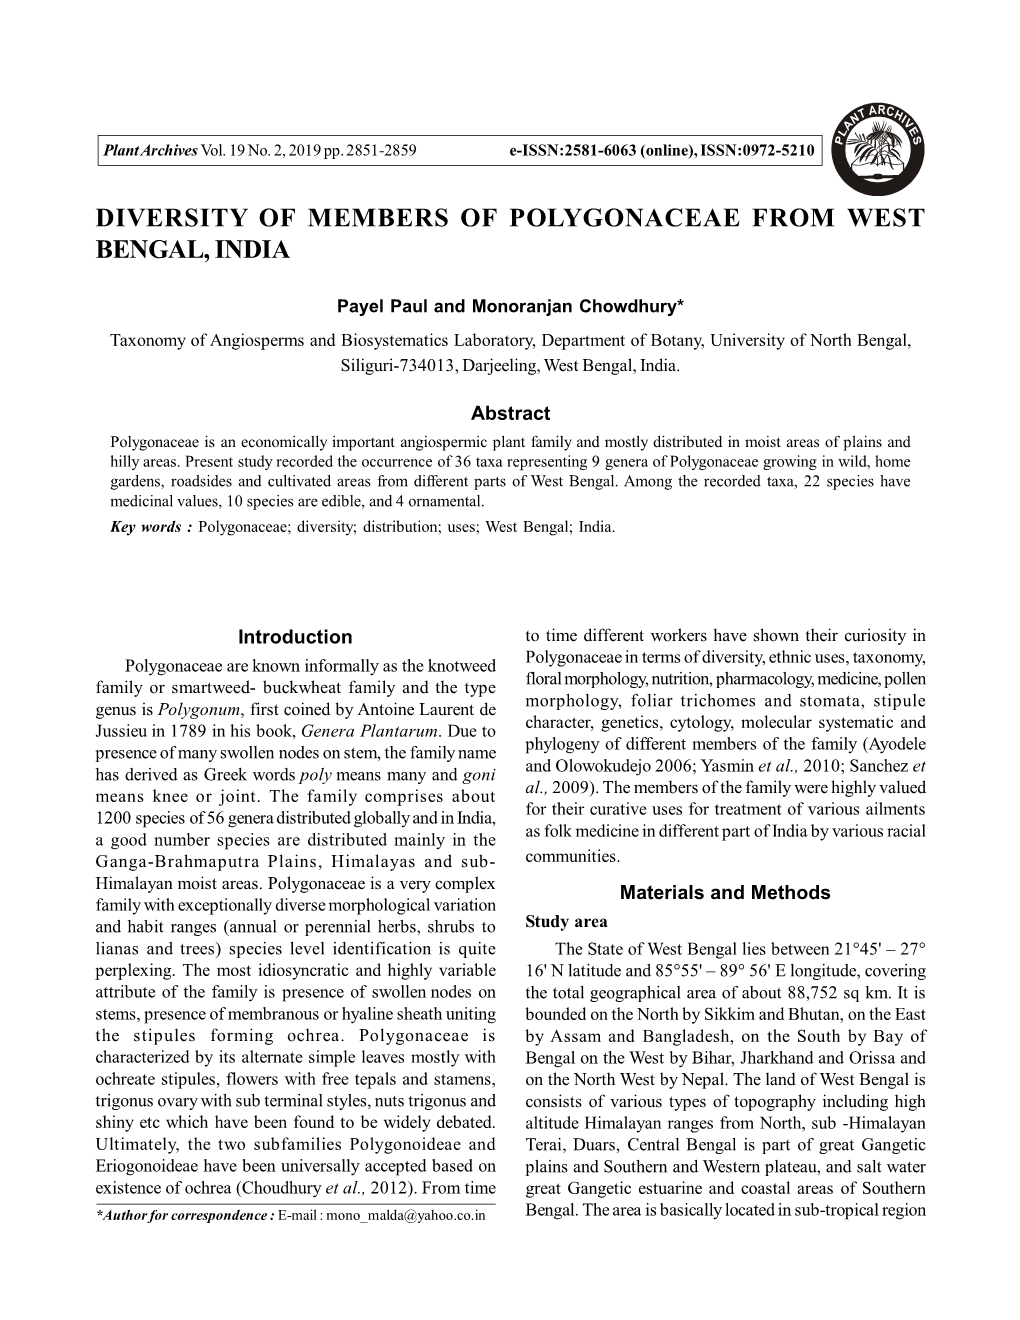 Diversity of Members of Polygonaceae from West Bengal, India